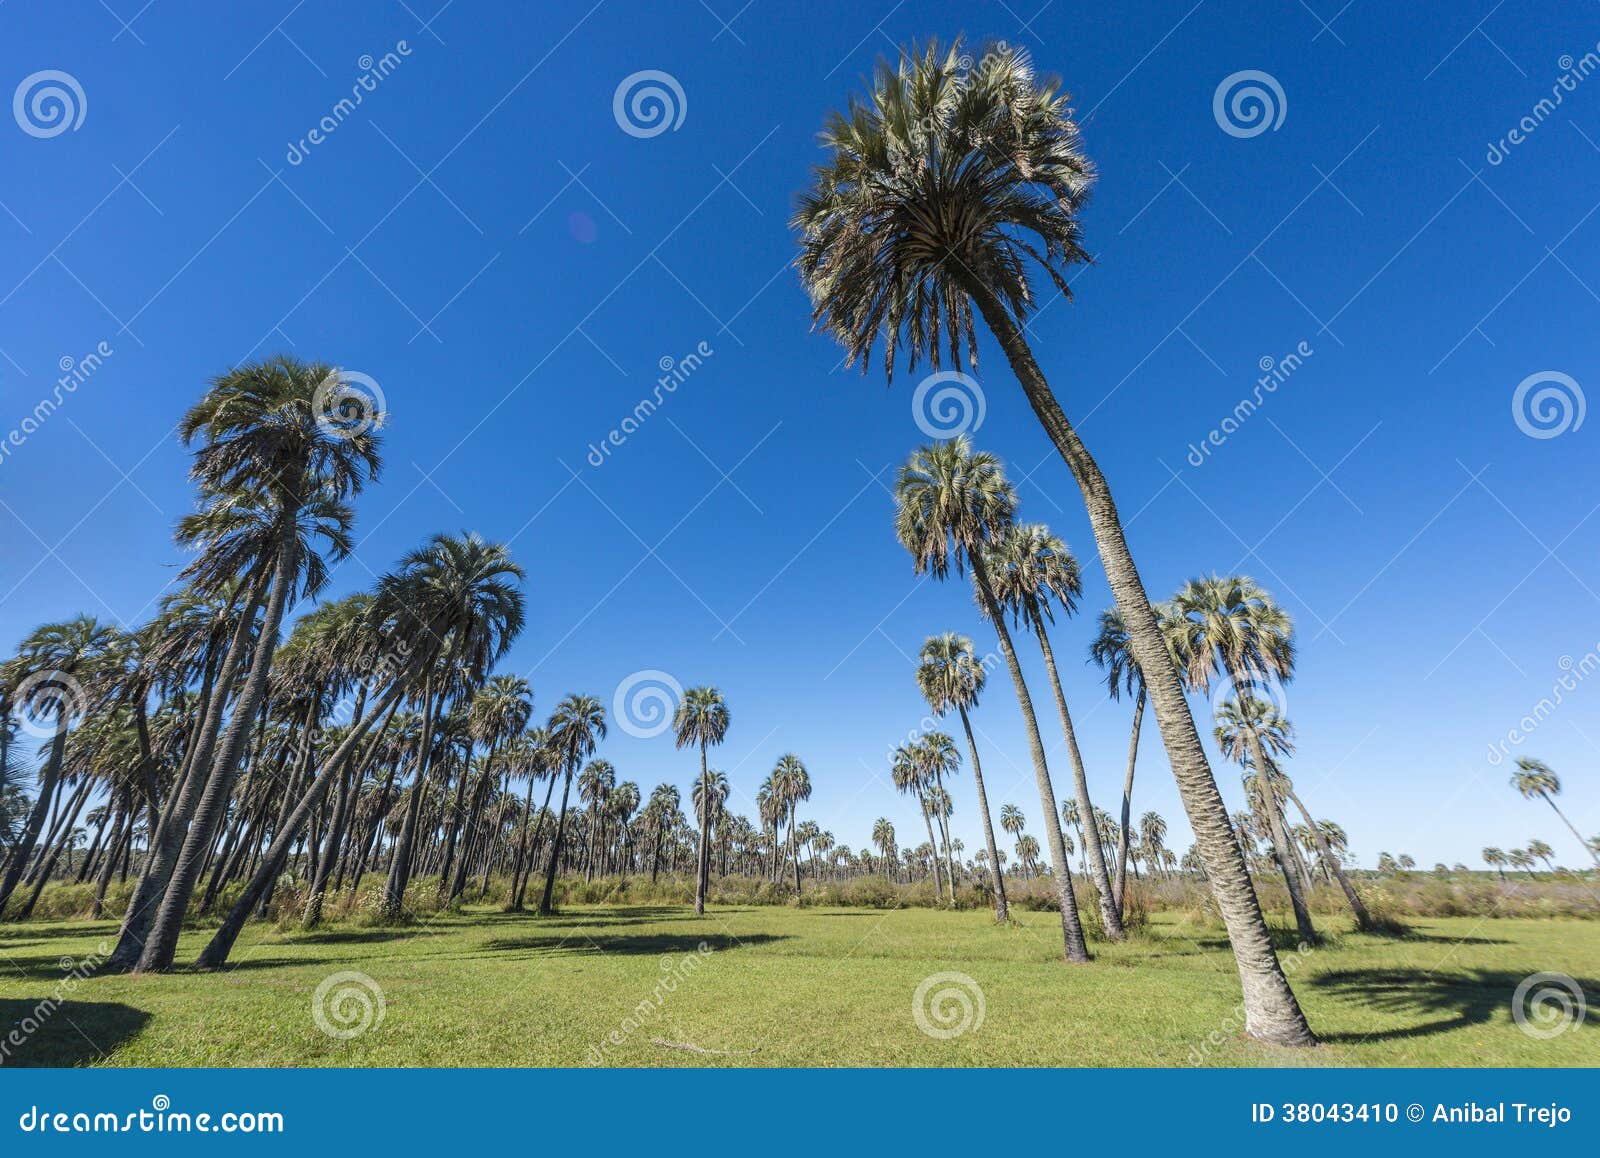 palms on el palmar national park, argentina